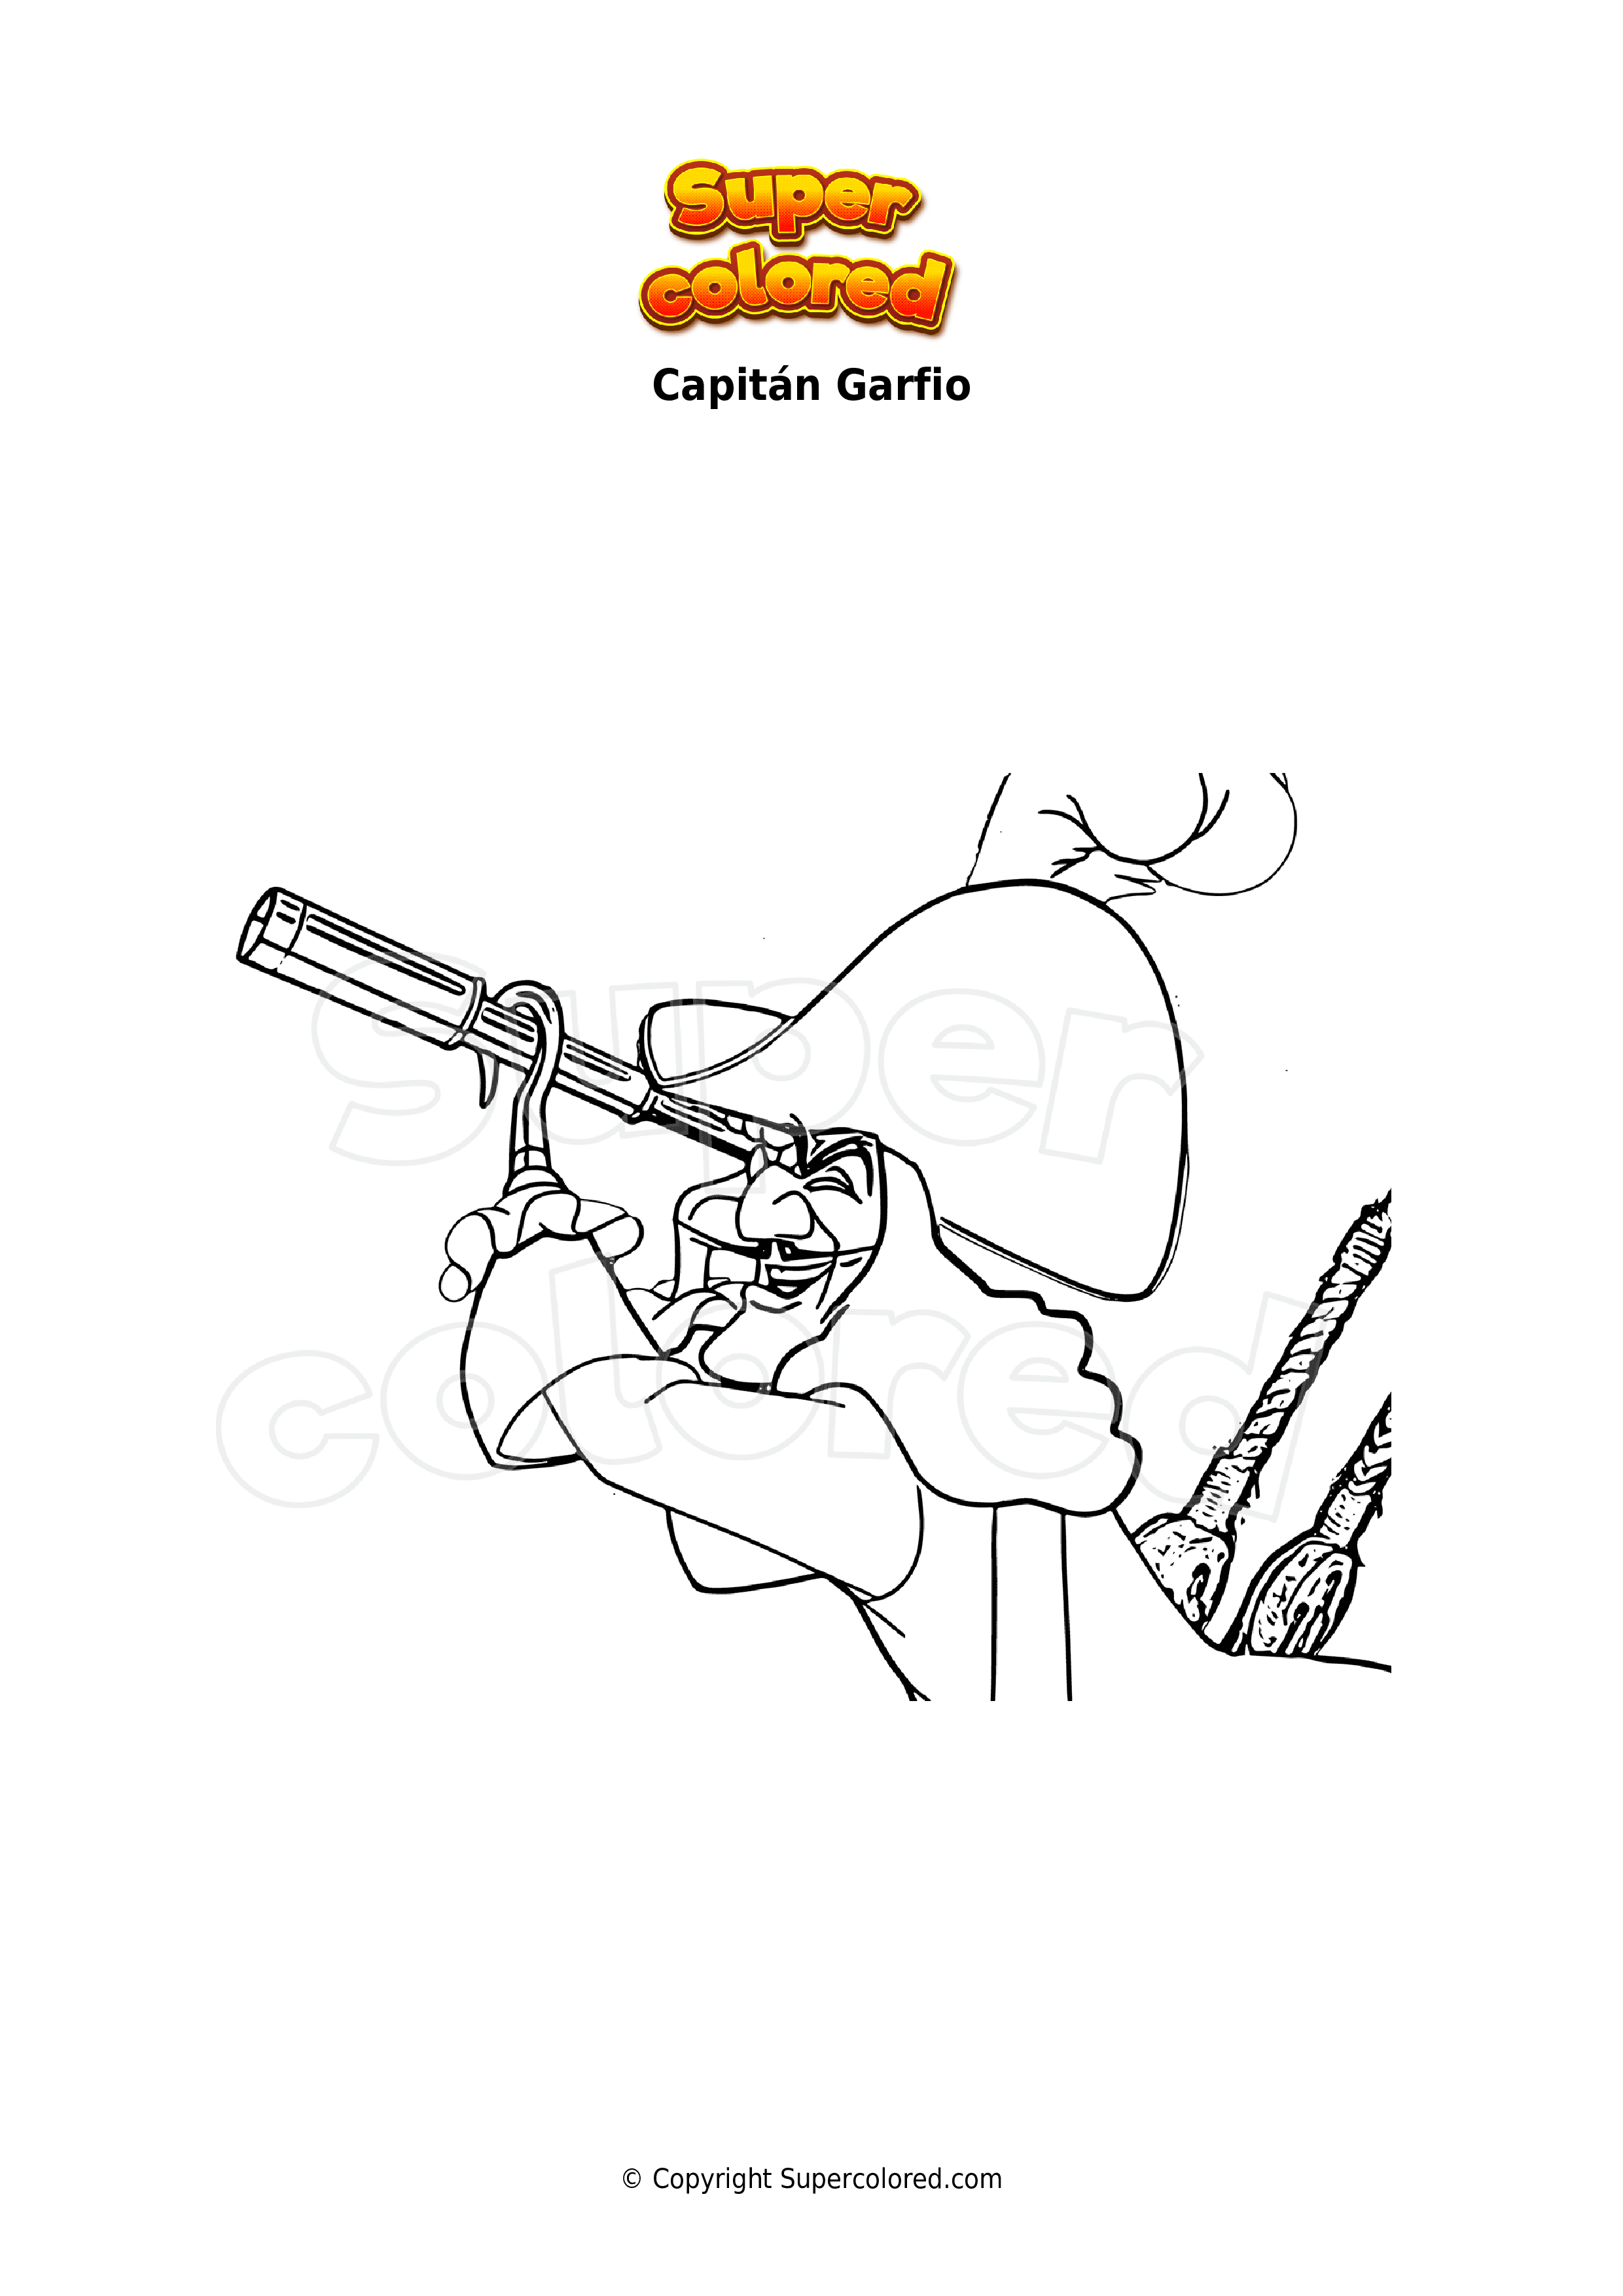 Dibujo para colorear Capitán Garfio - Supercolored.com